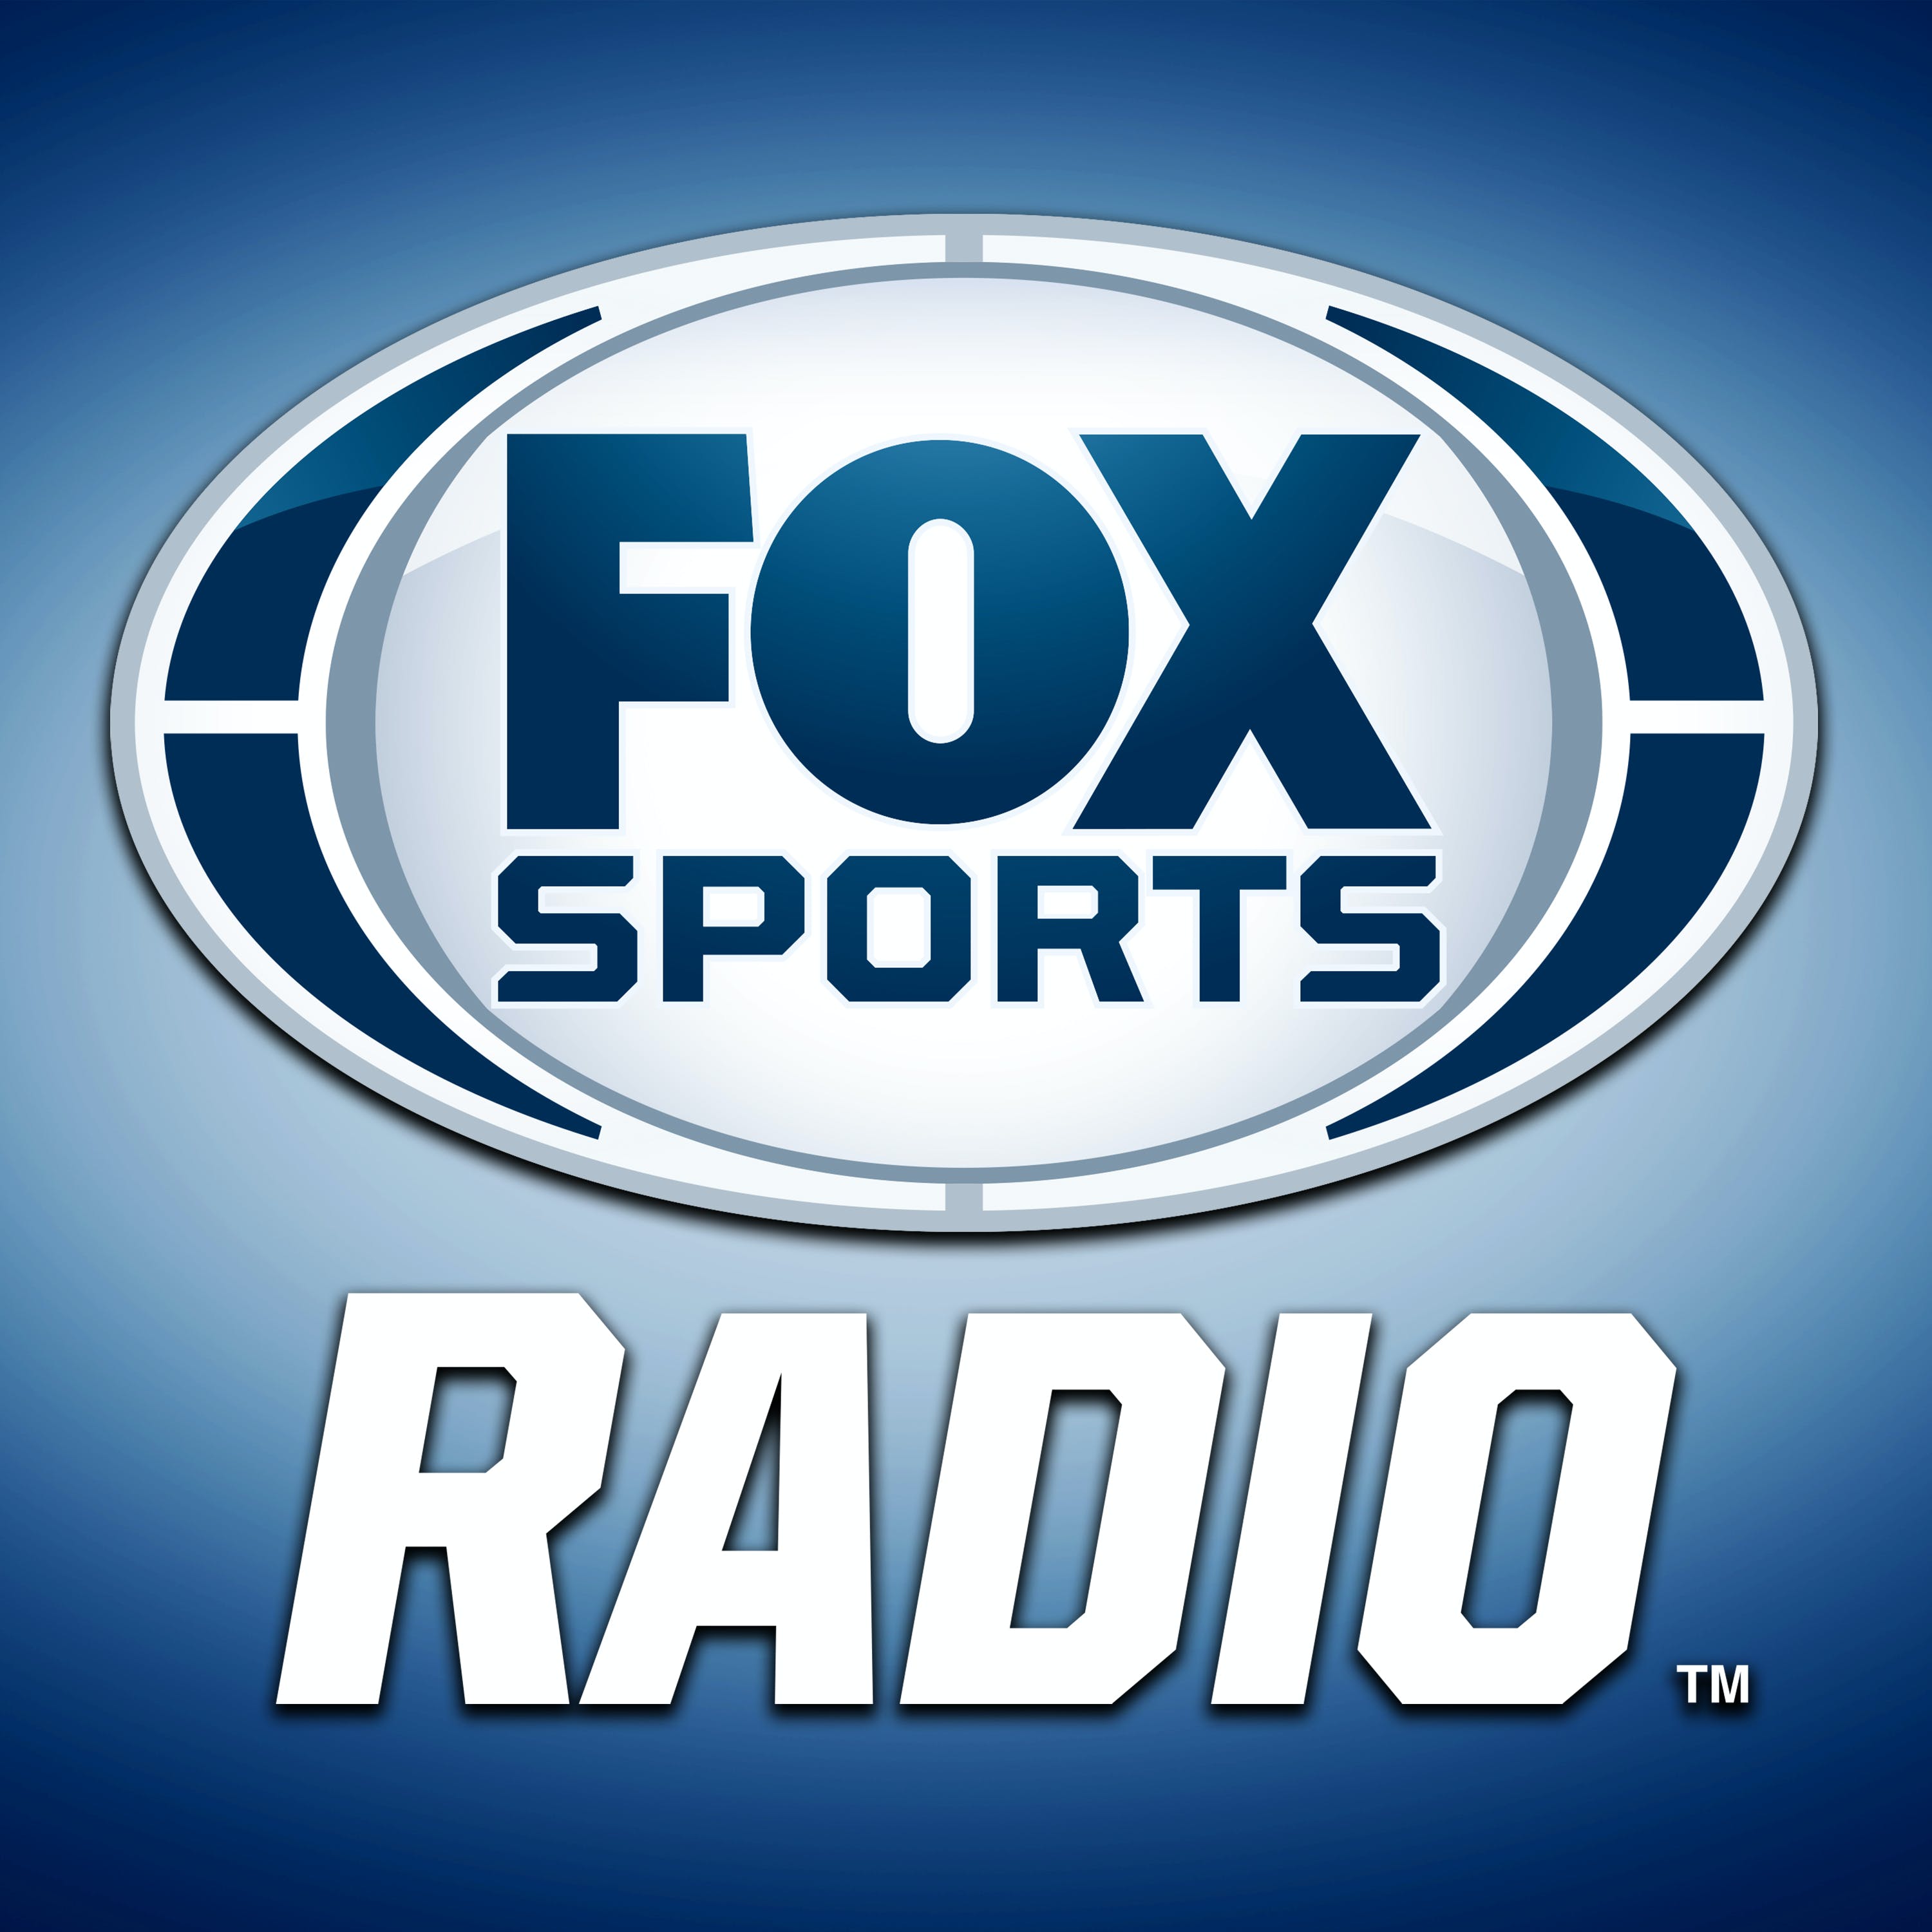 05/29/2021 - FOX Sports Saturday with Kelvin Washington and Cuttino Mobley